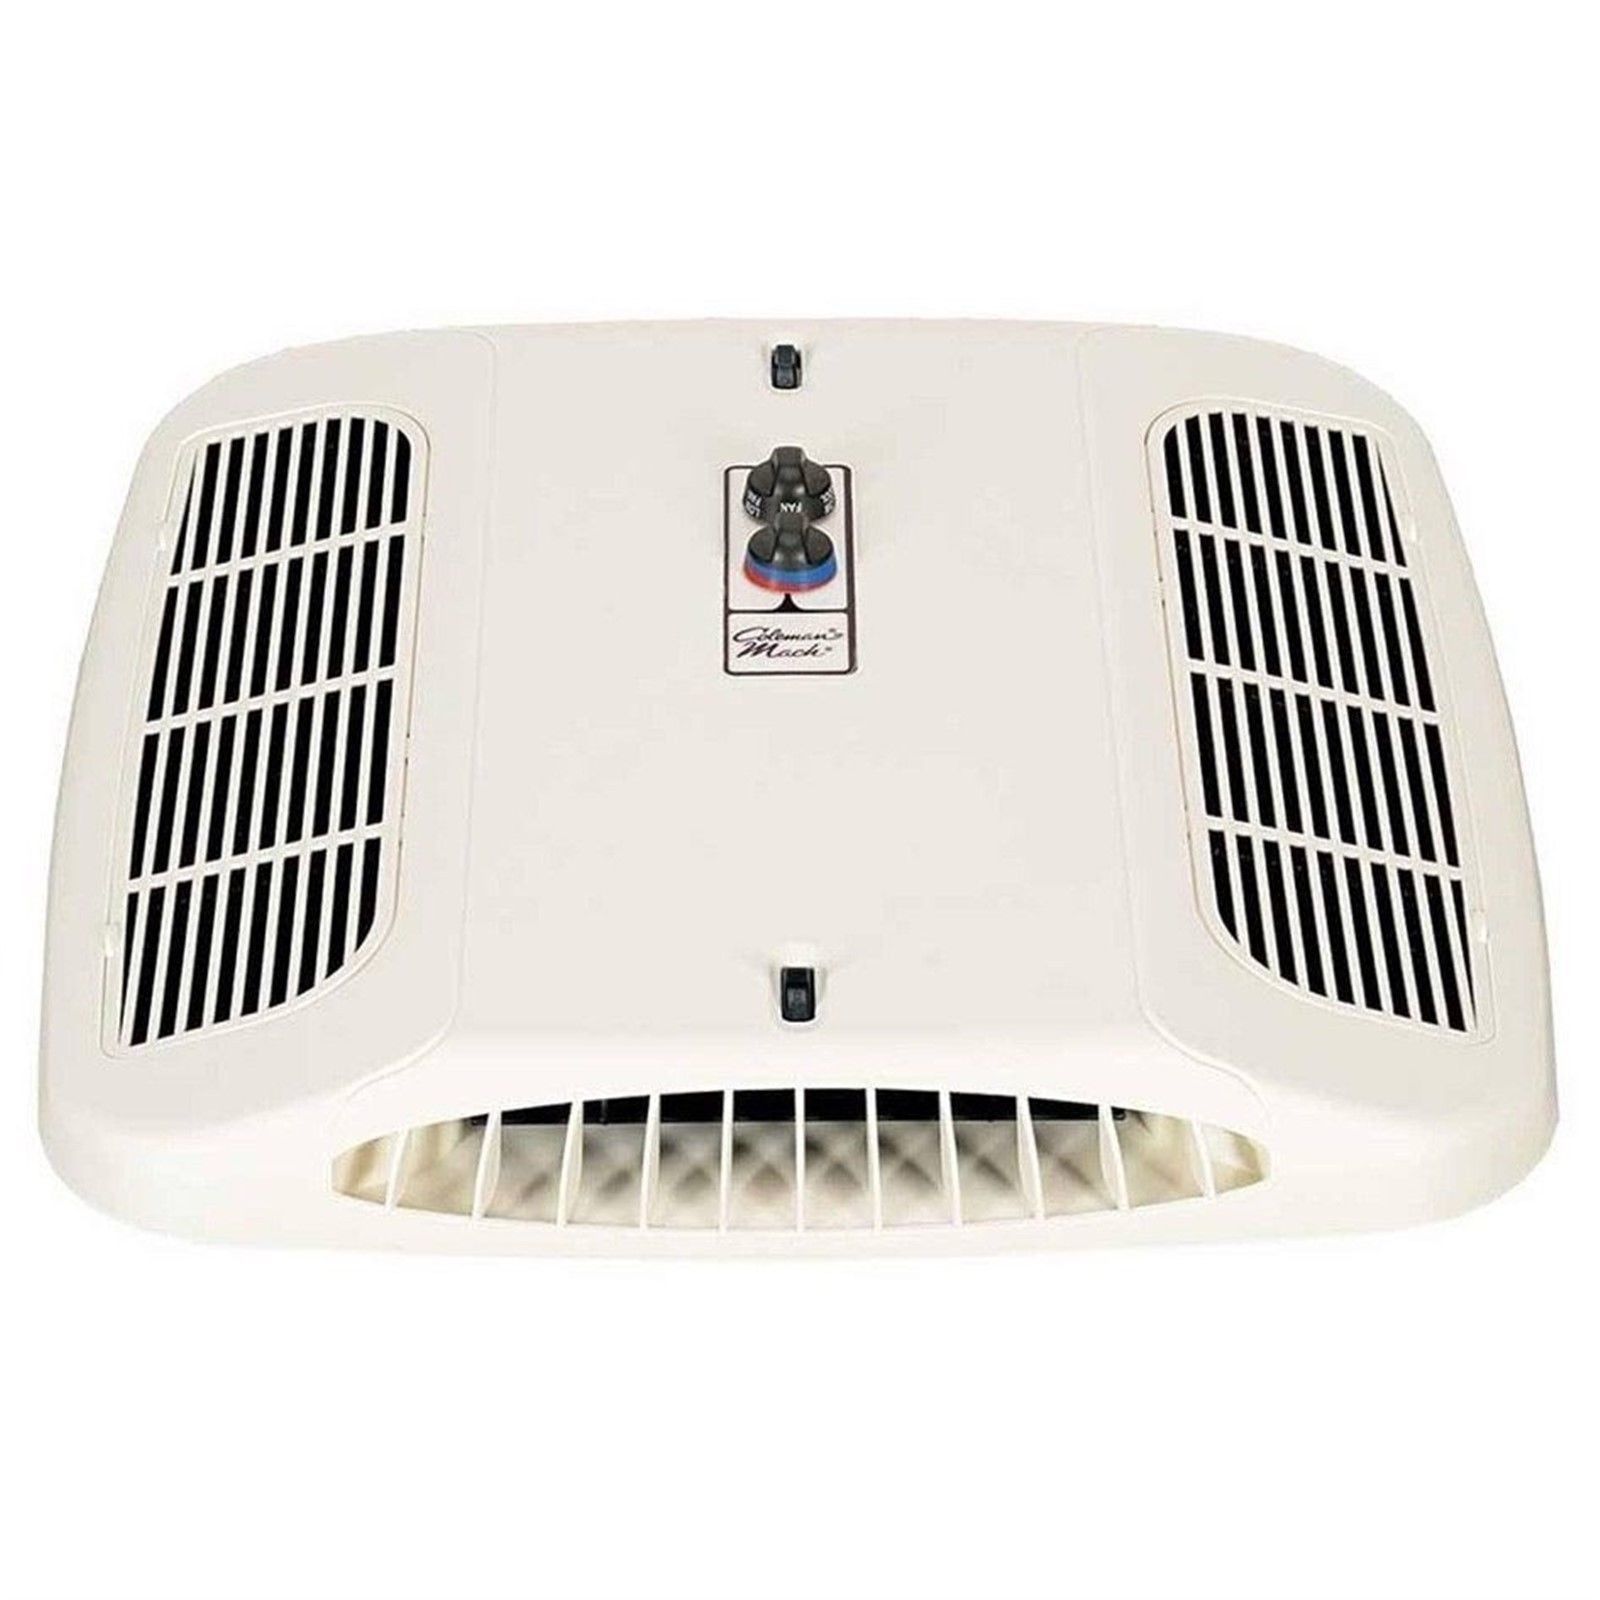 RV Coleman Roughneck 13500 btu RV Roof Air Conditioner complete w/ NON